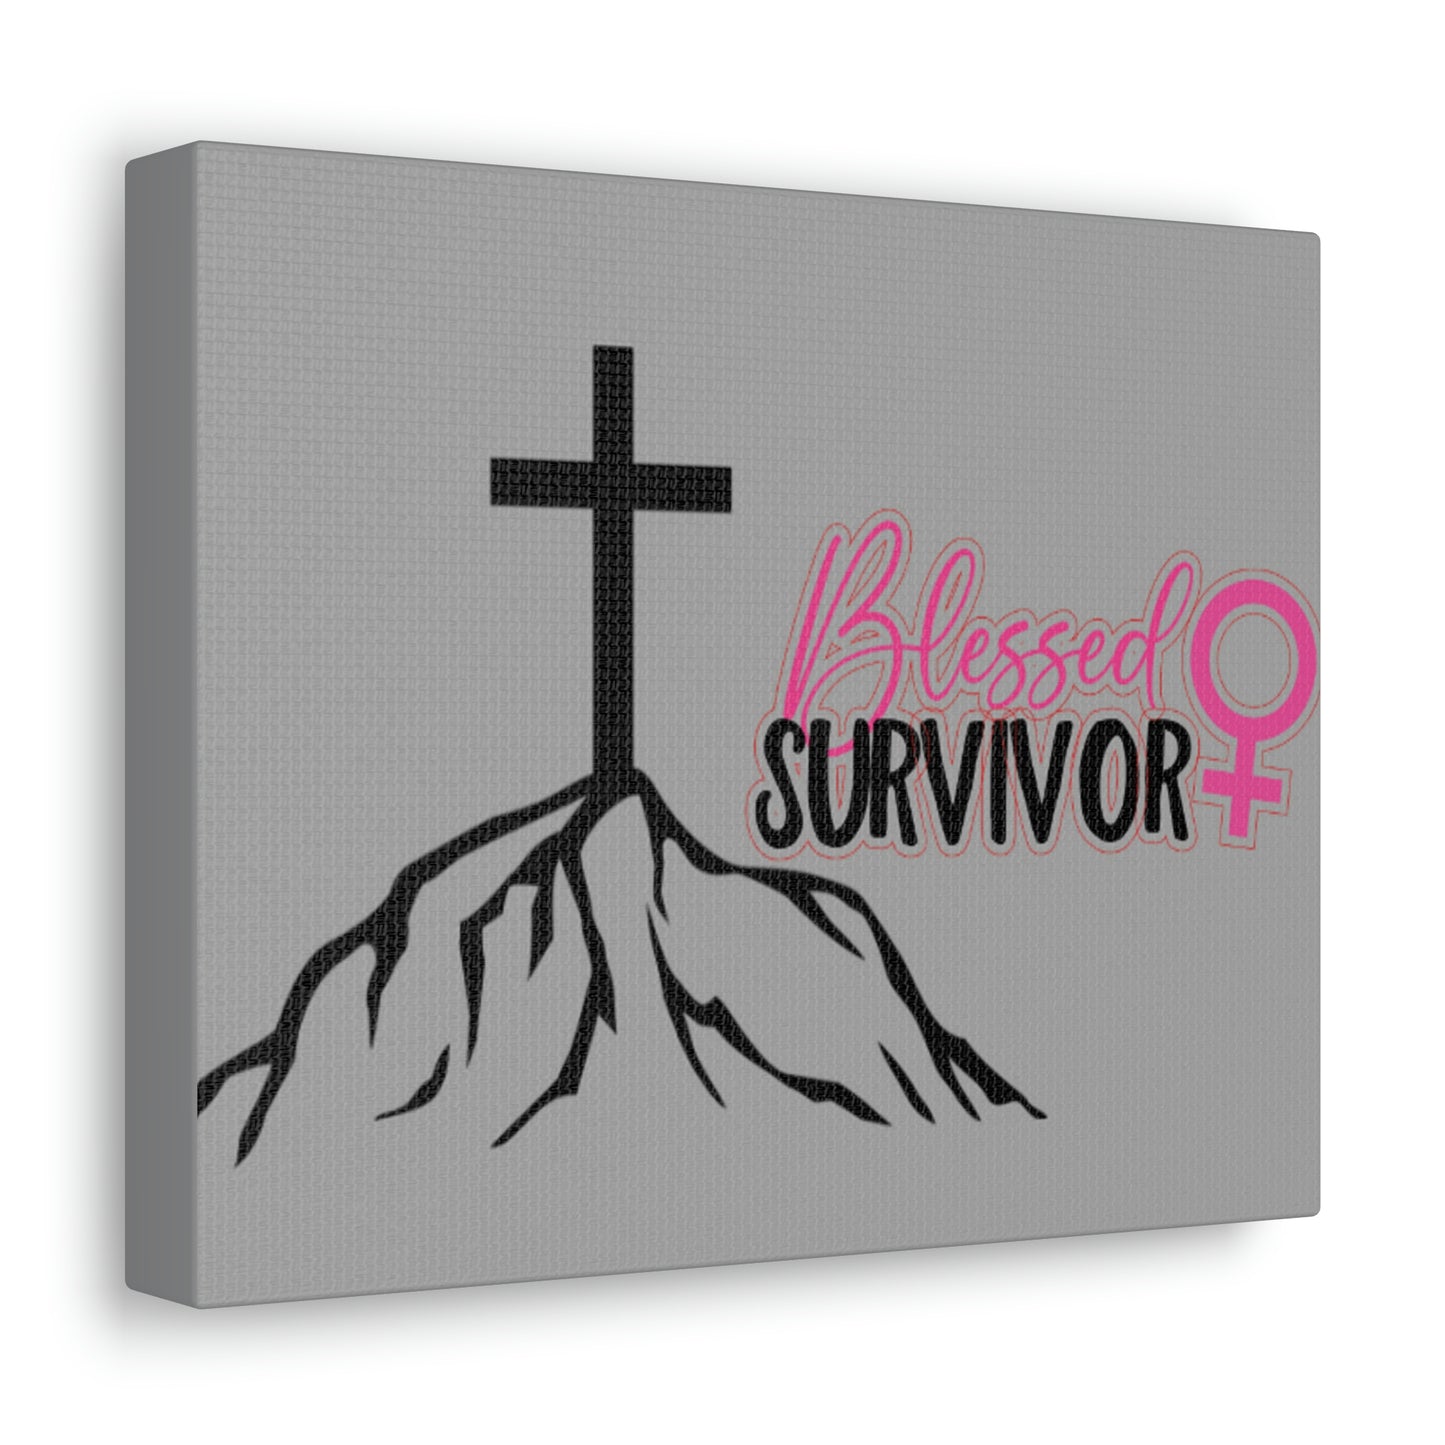 Blessed Survivor. Canvas for Breast Cancer Survivors